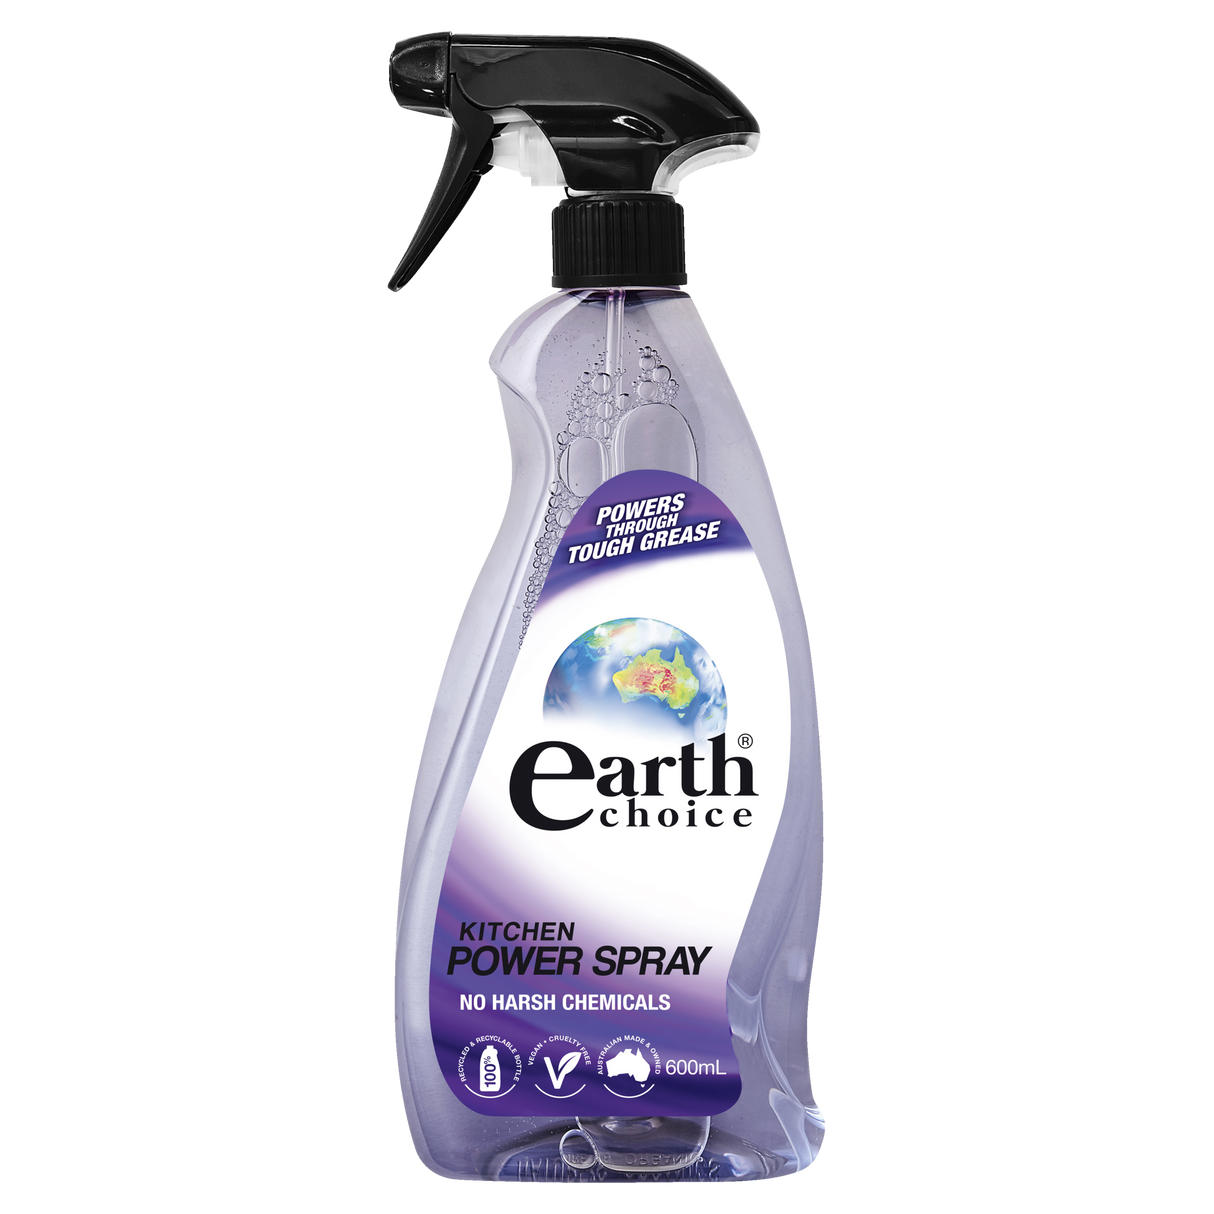 Earth Choice Kitchen Power Spray 600ml